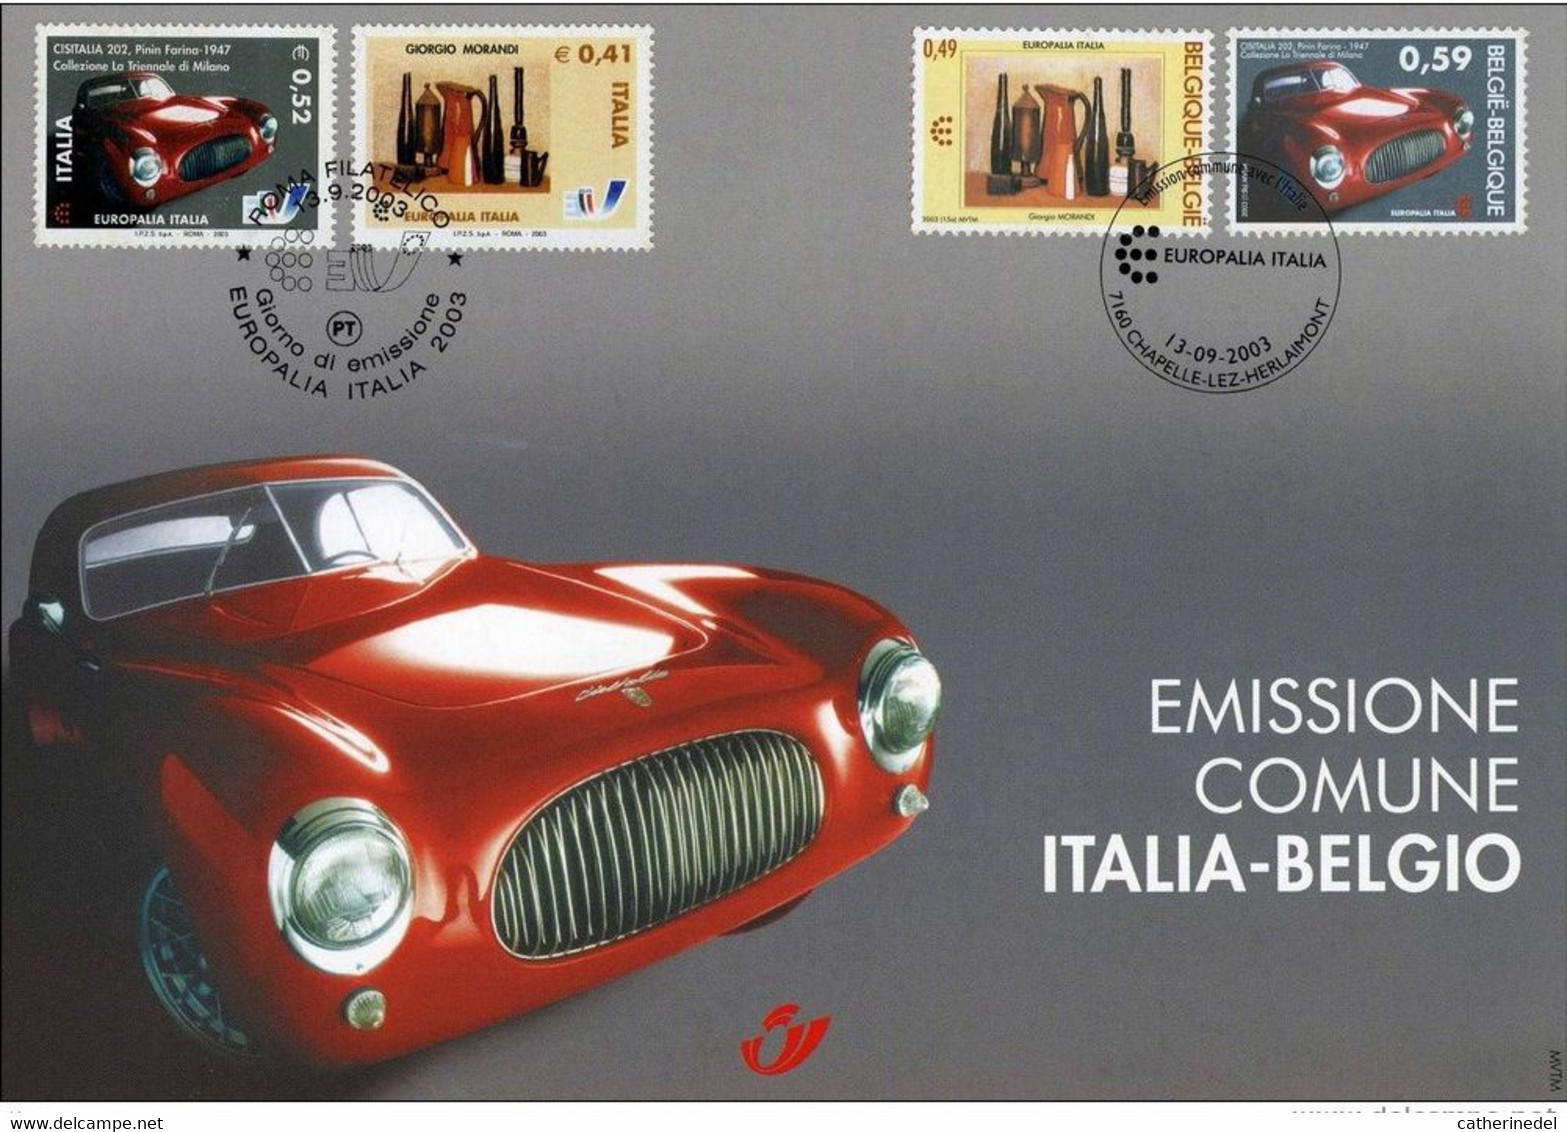 Année 2003 : Carte Souvenir 3205HK - Europalia Italie - Herdenkingskaarten - Gezamelijke Uitgaven [HK]